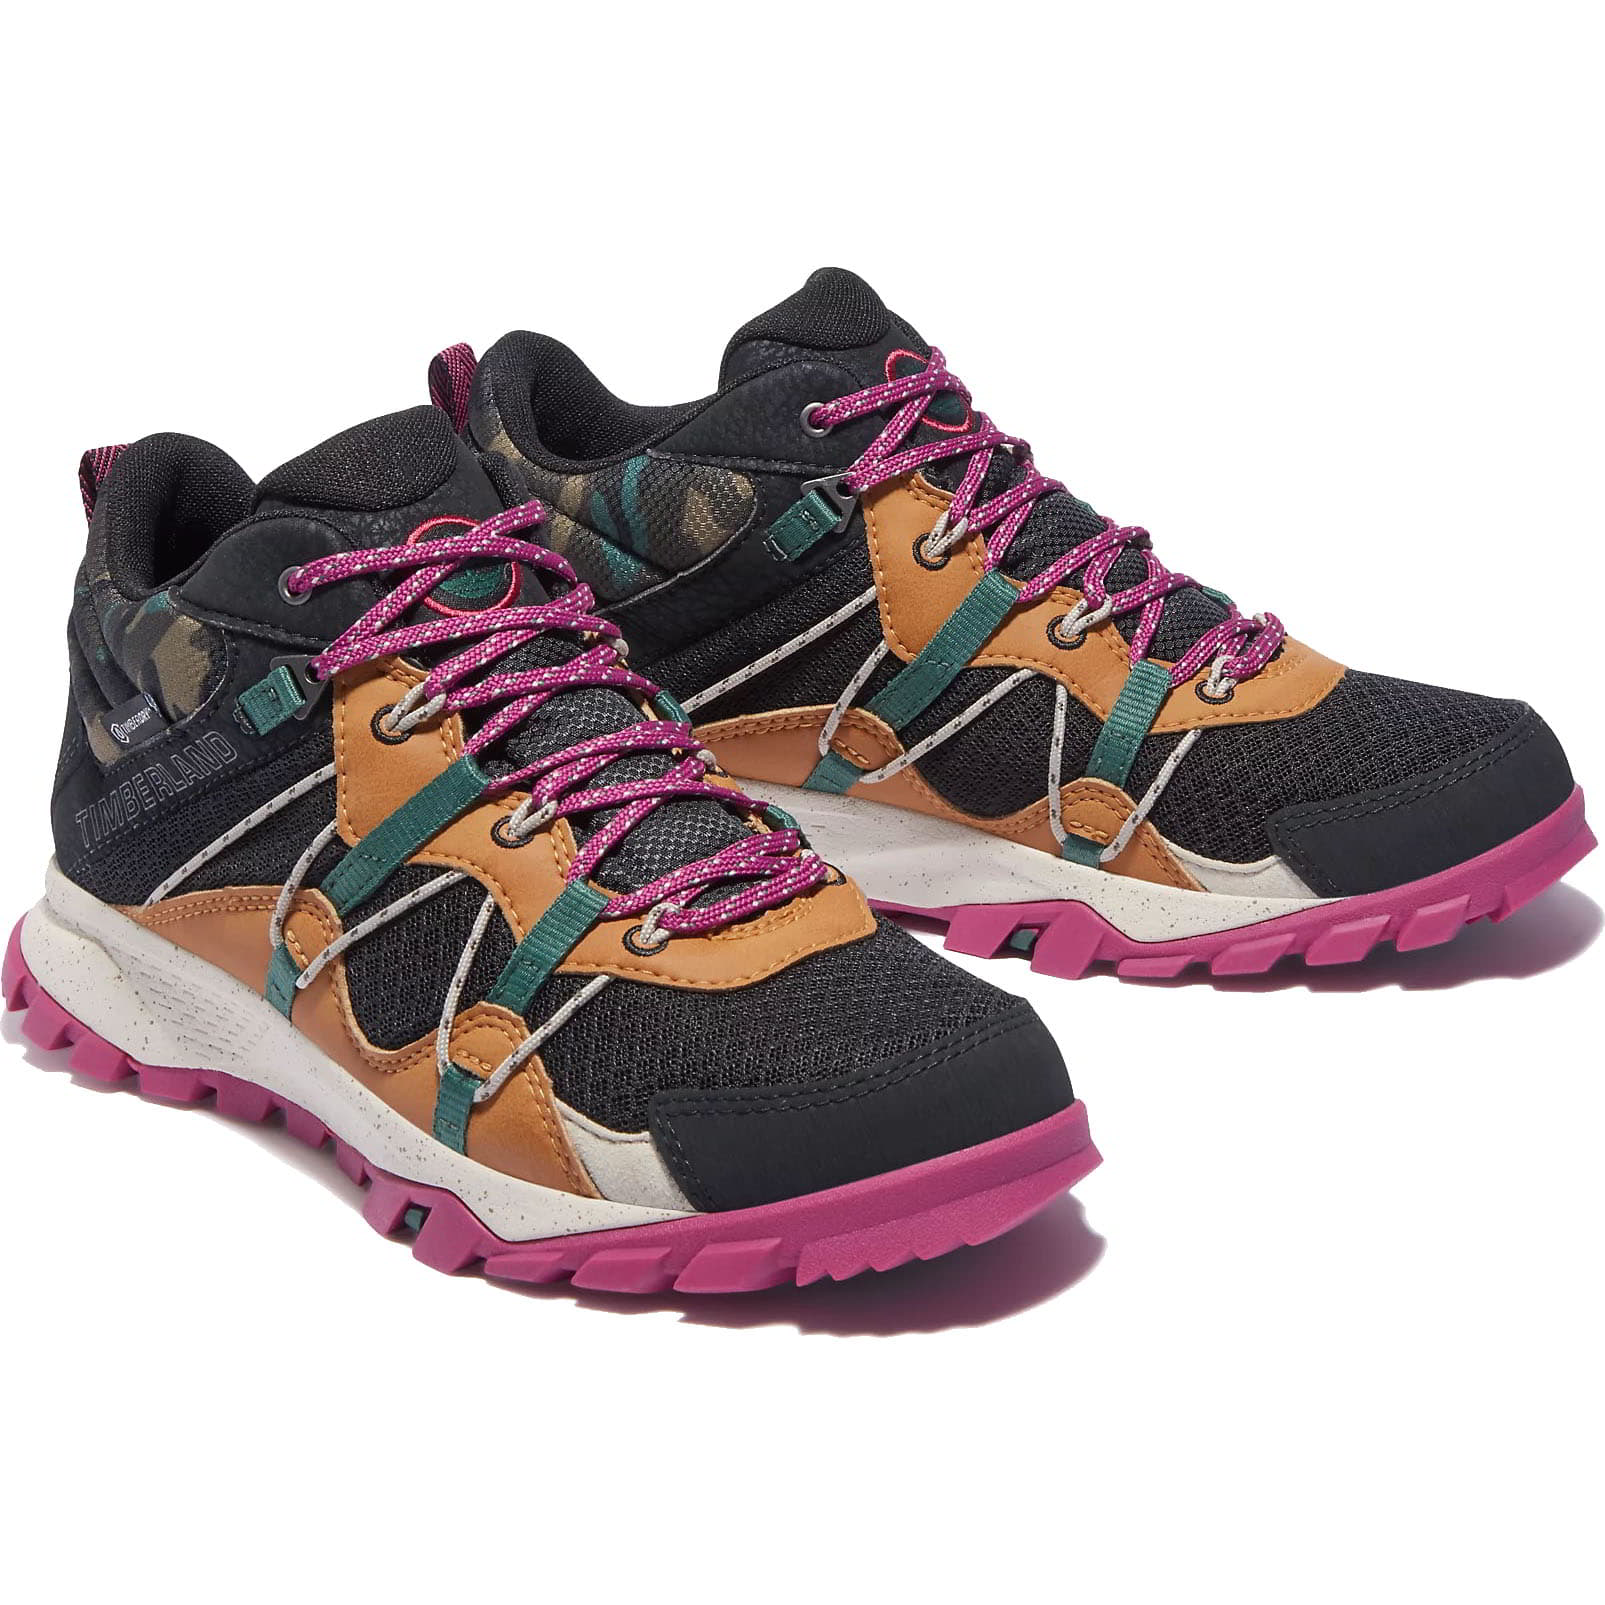 Timberland Womens Garrison Trail Waterproof Walking Boots Trainers - Black Mesh Camo 2951